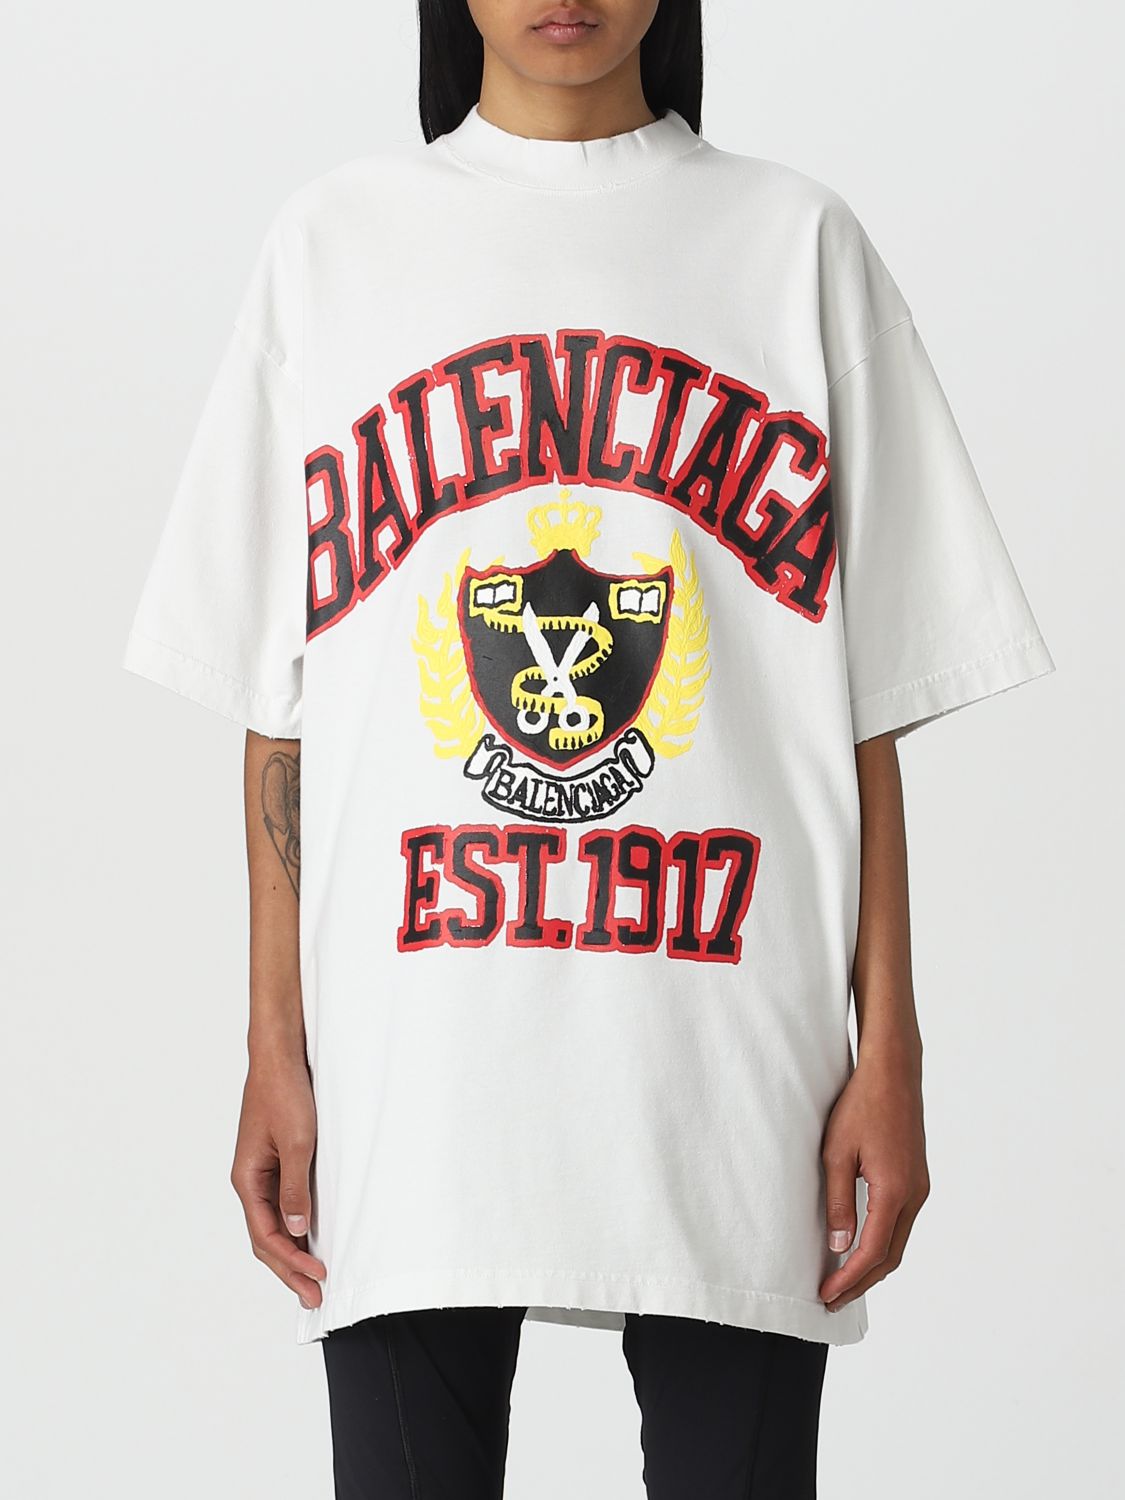 Women's BALENCIAGA T-Shirts Sale, Up To 70% Off | ModeSens